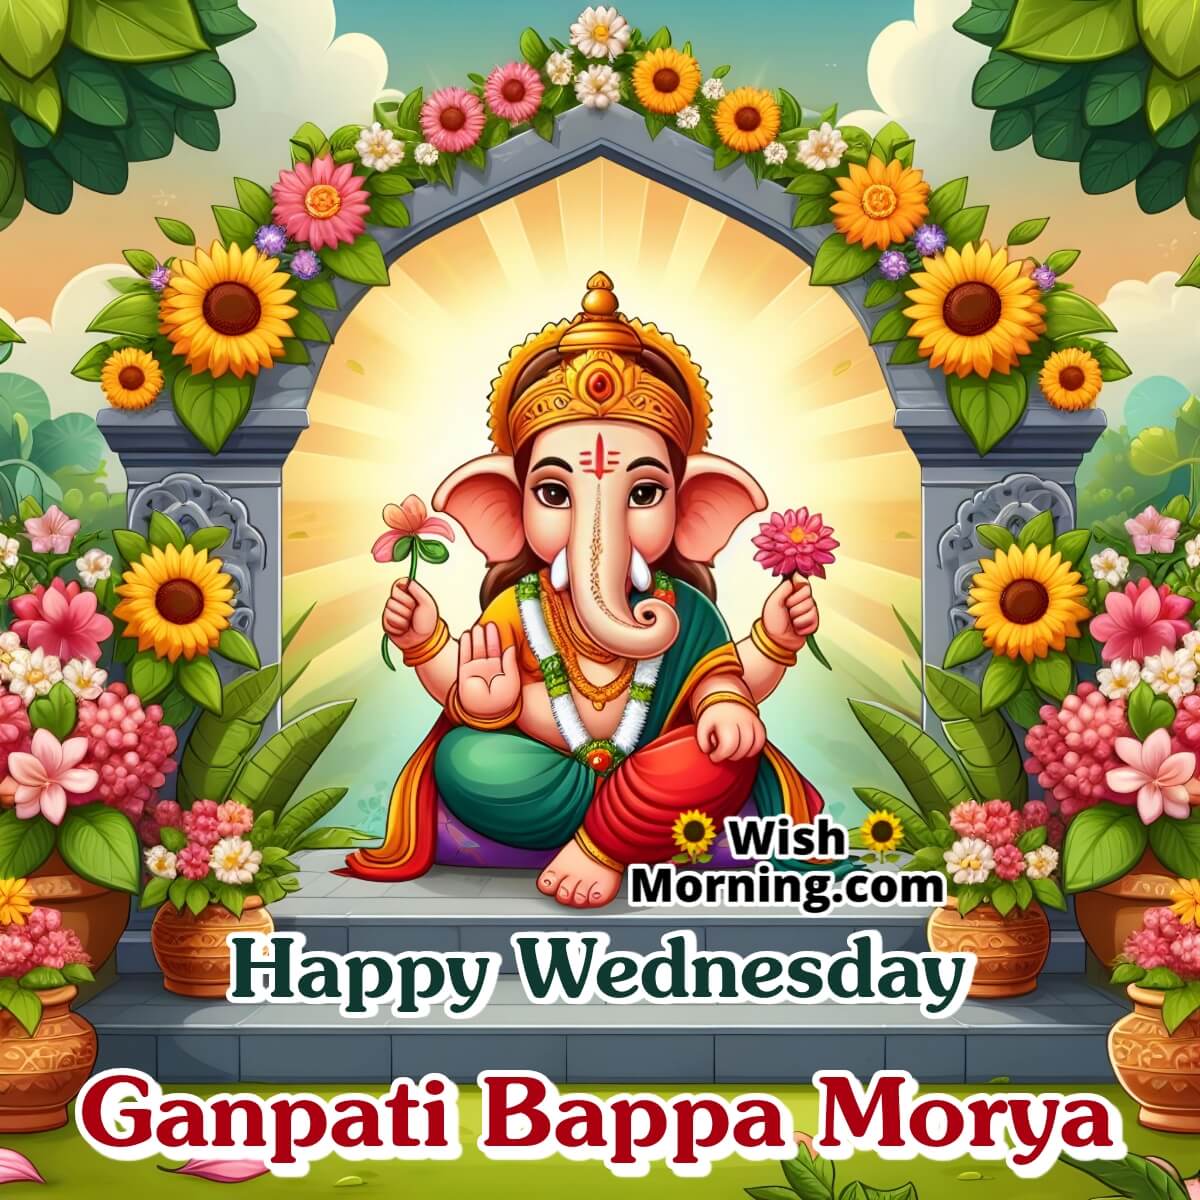 Happy Wednesday Ganpati Image